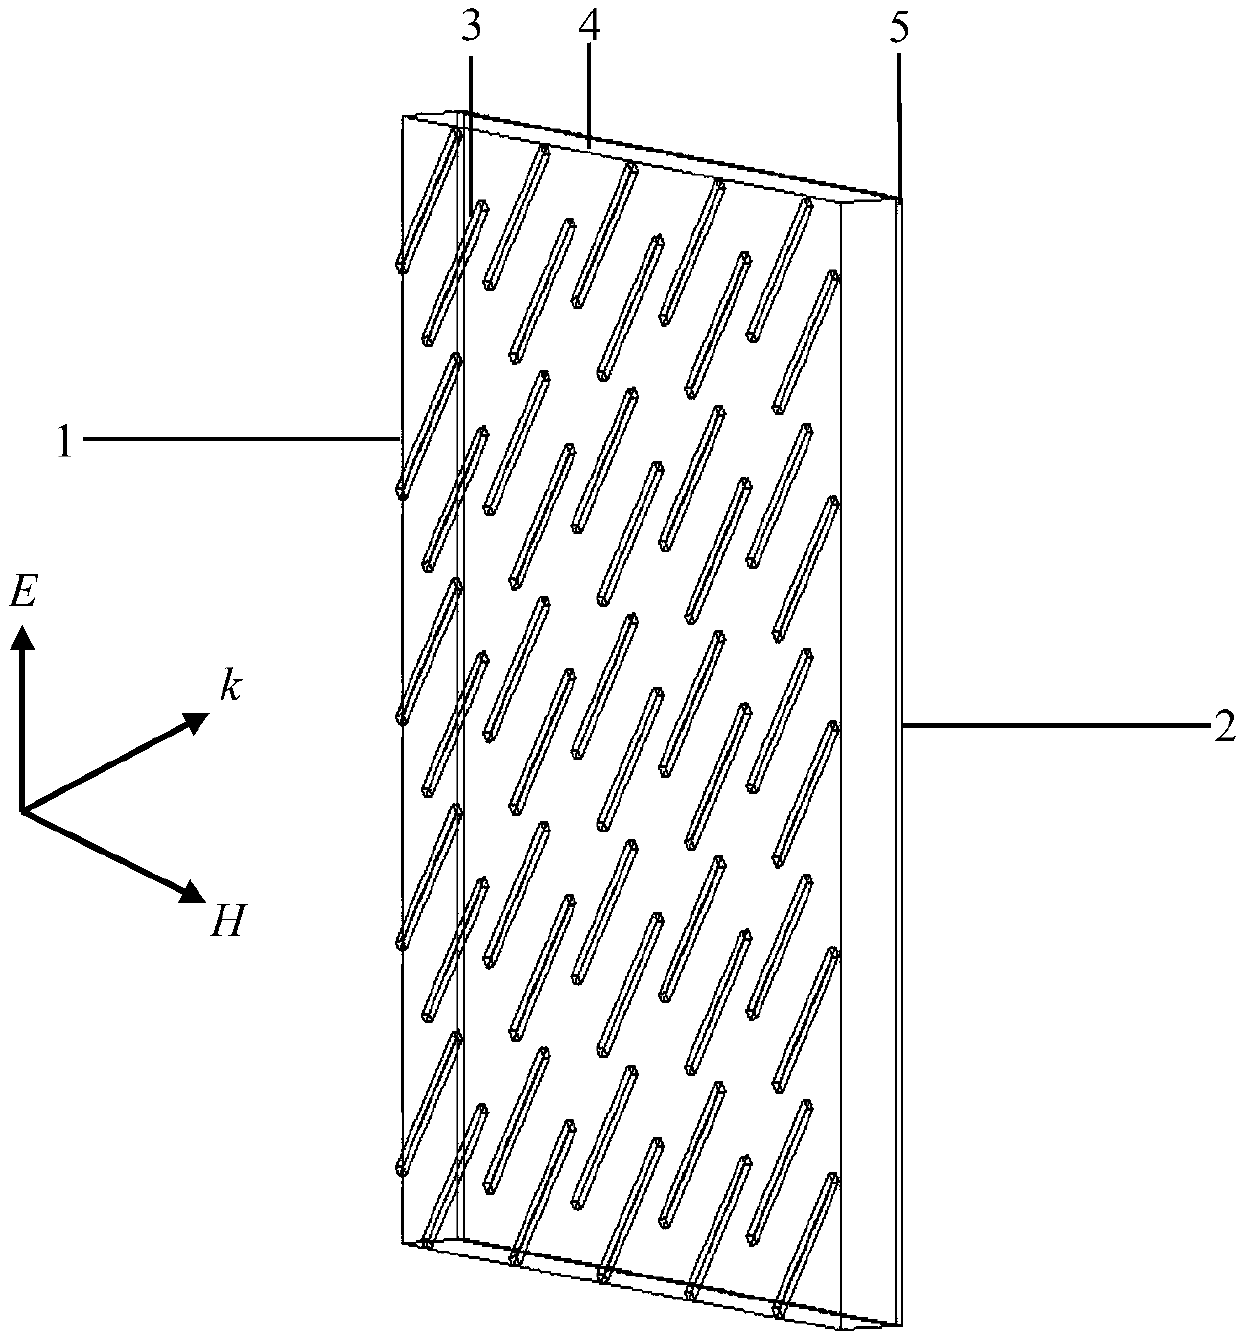 Parallel line dipole structure-based chiral metasurface terahertz polarizer